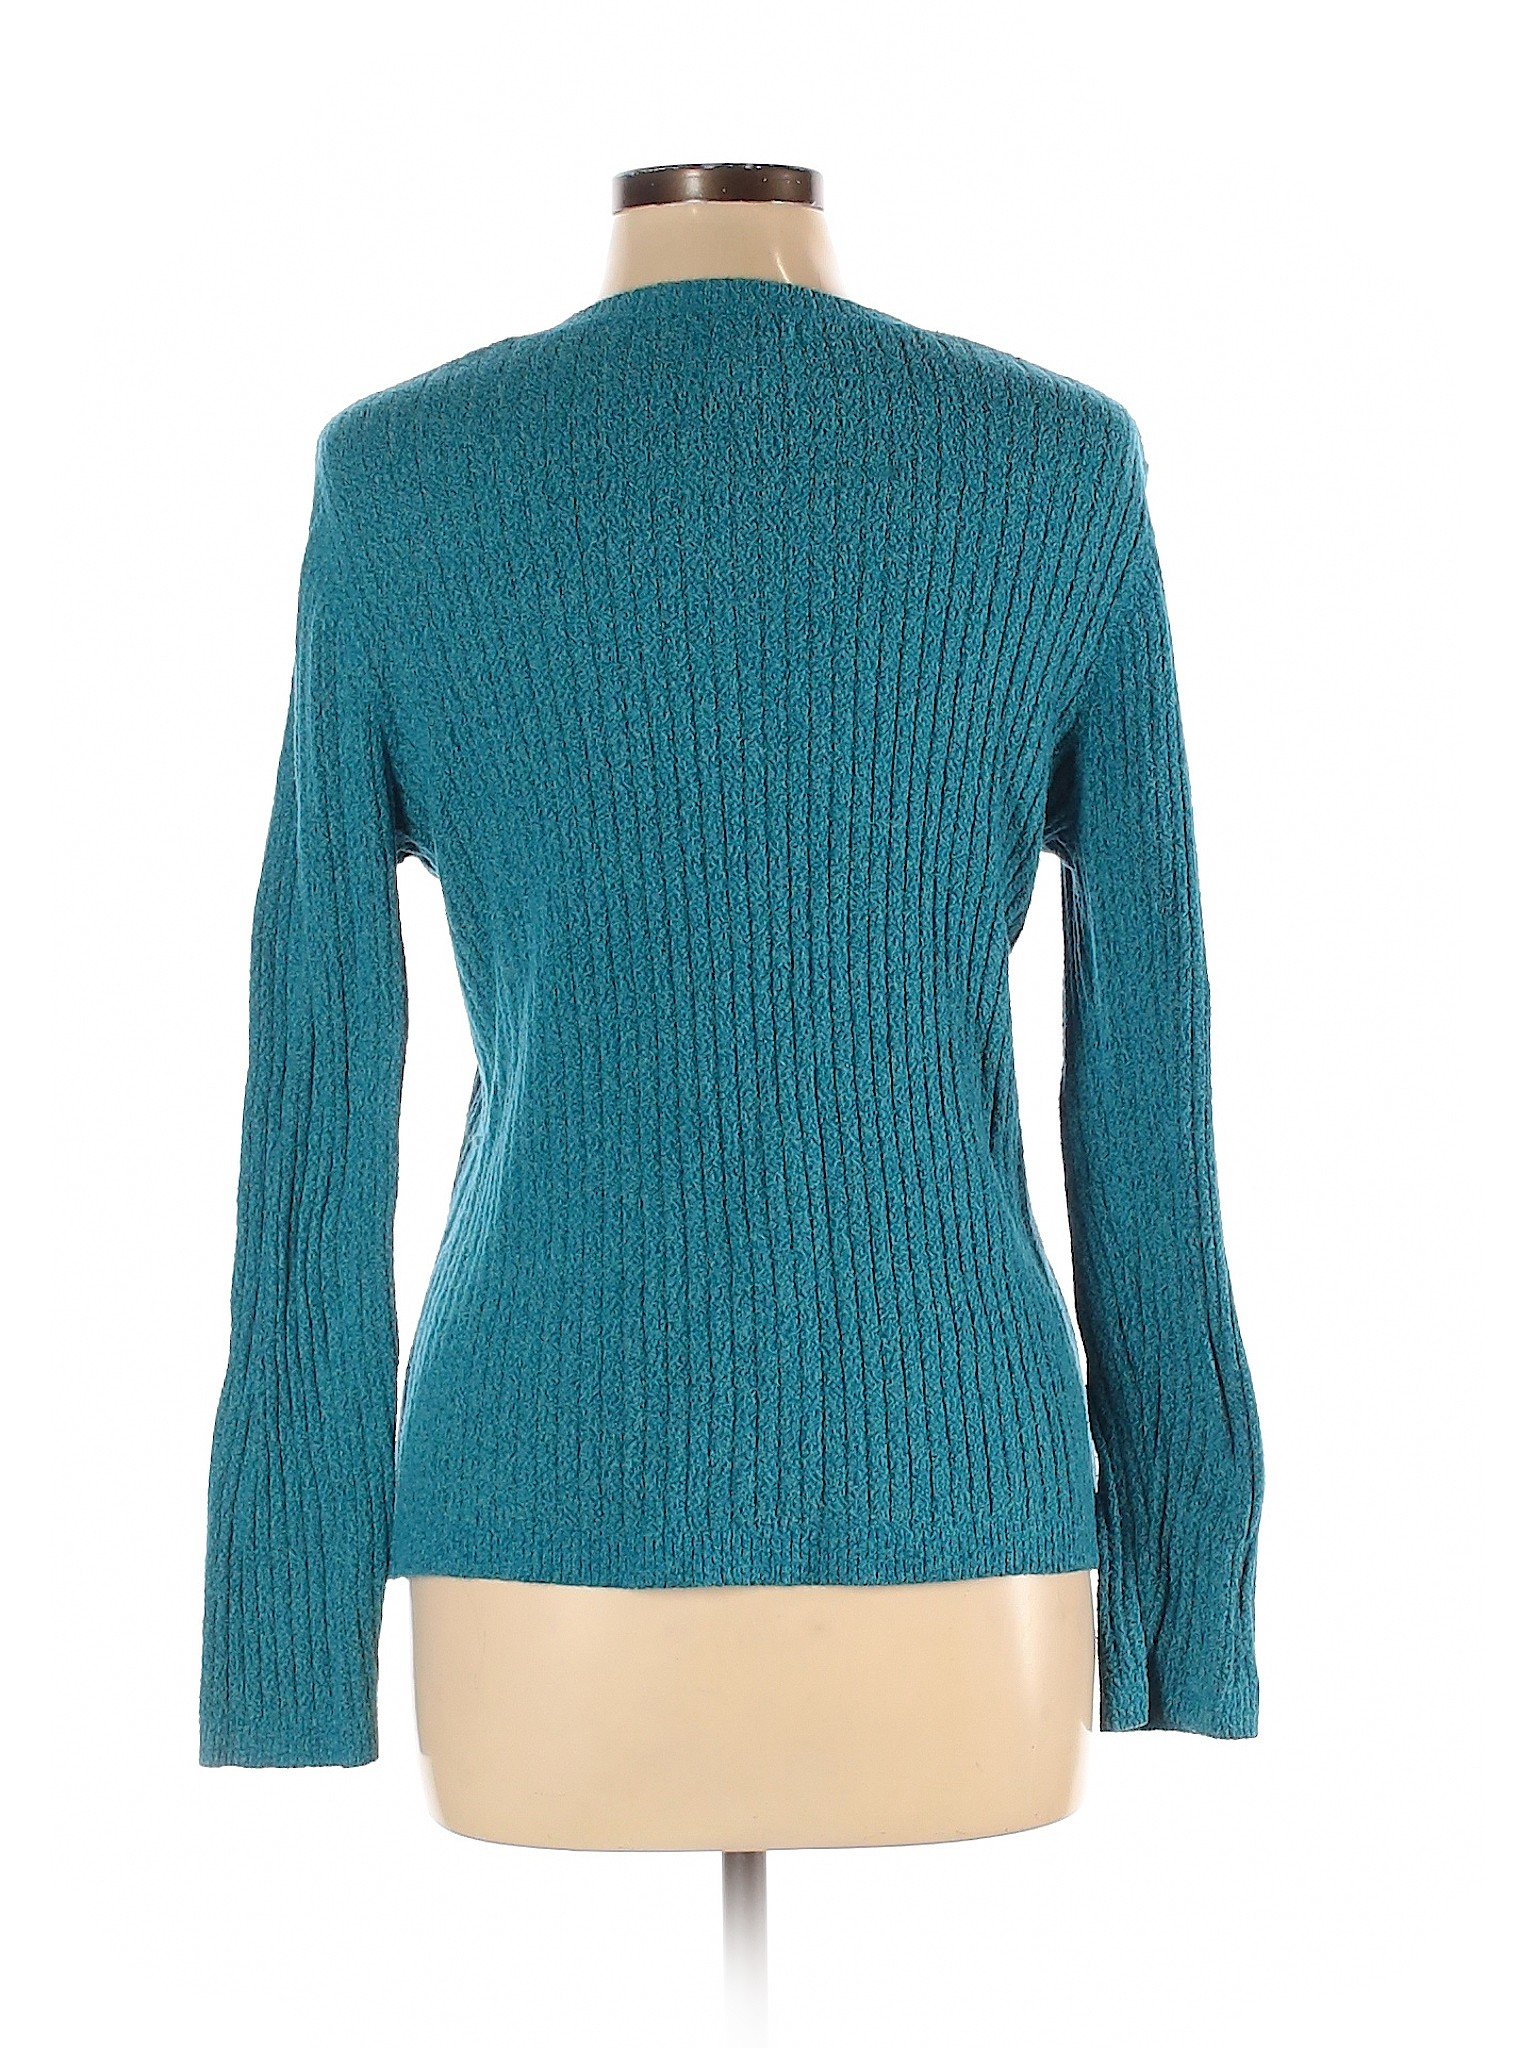 Croft & Barrow Women Green Pullover Sweater M | eBay